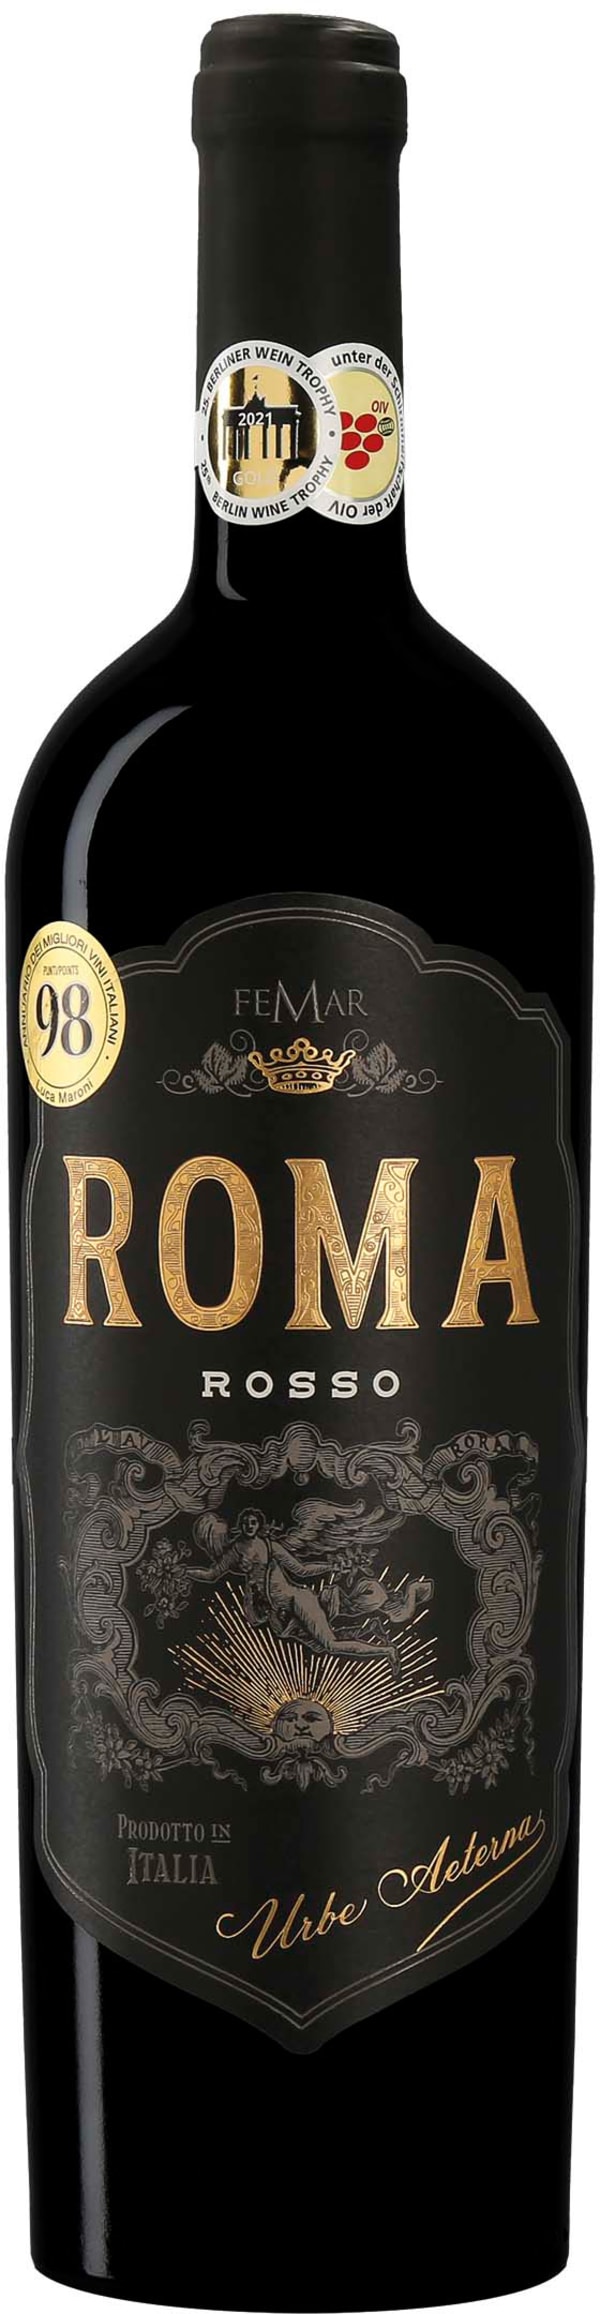 Femar Urbe Aeterna Roma Alko | Rosso 2019